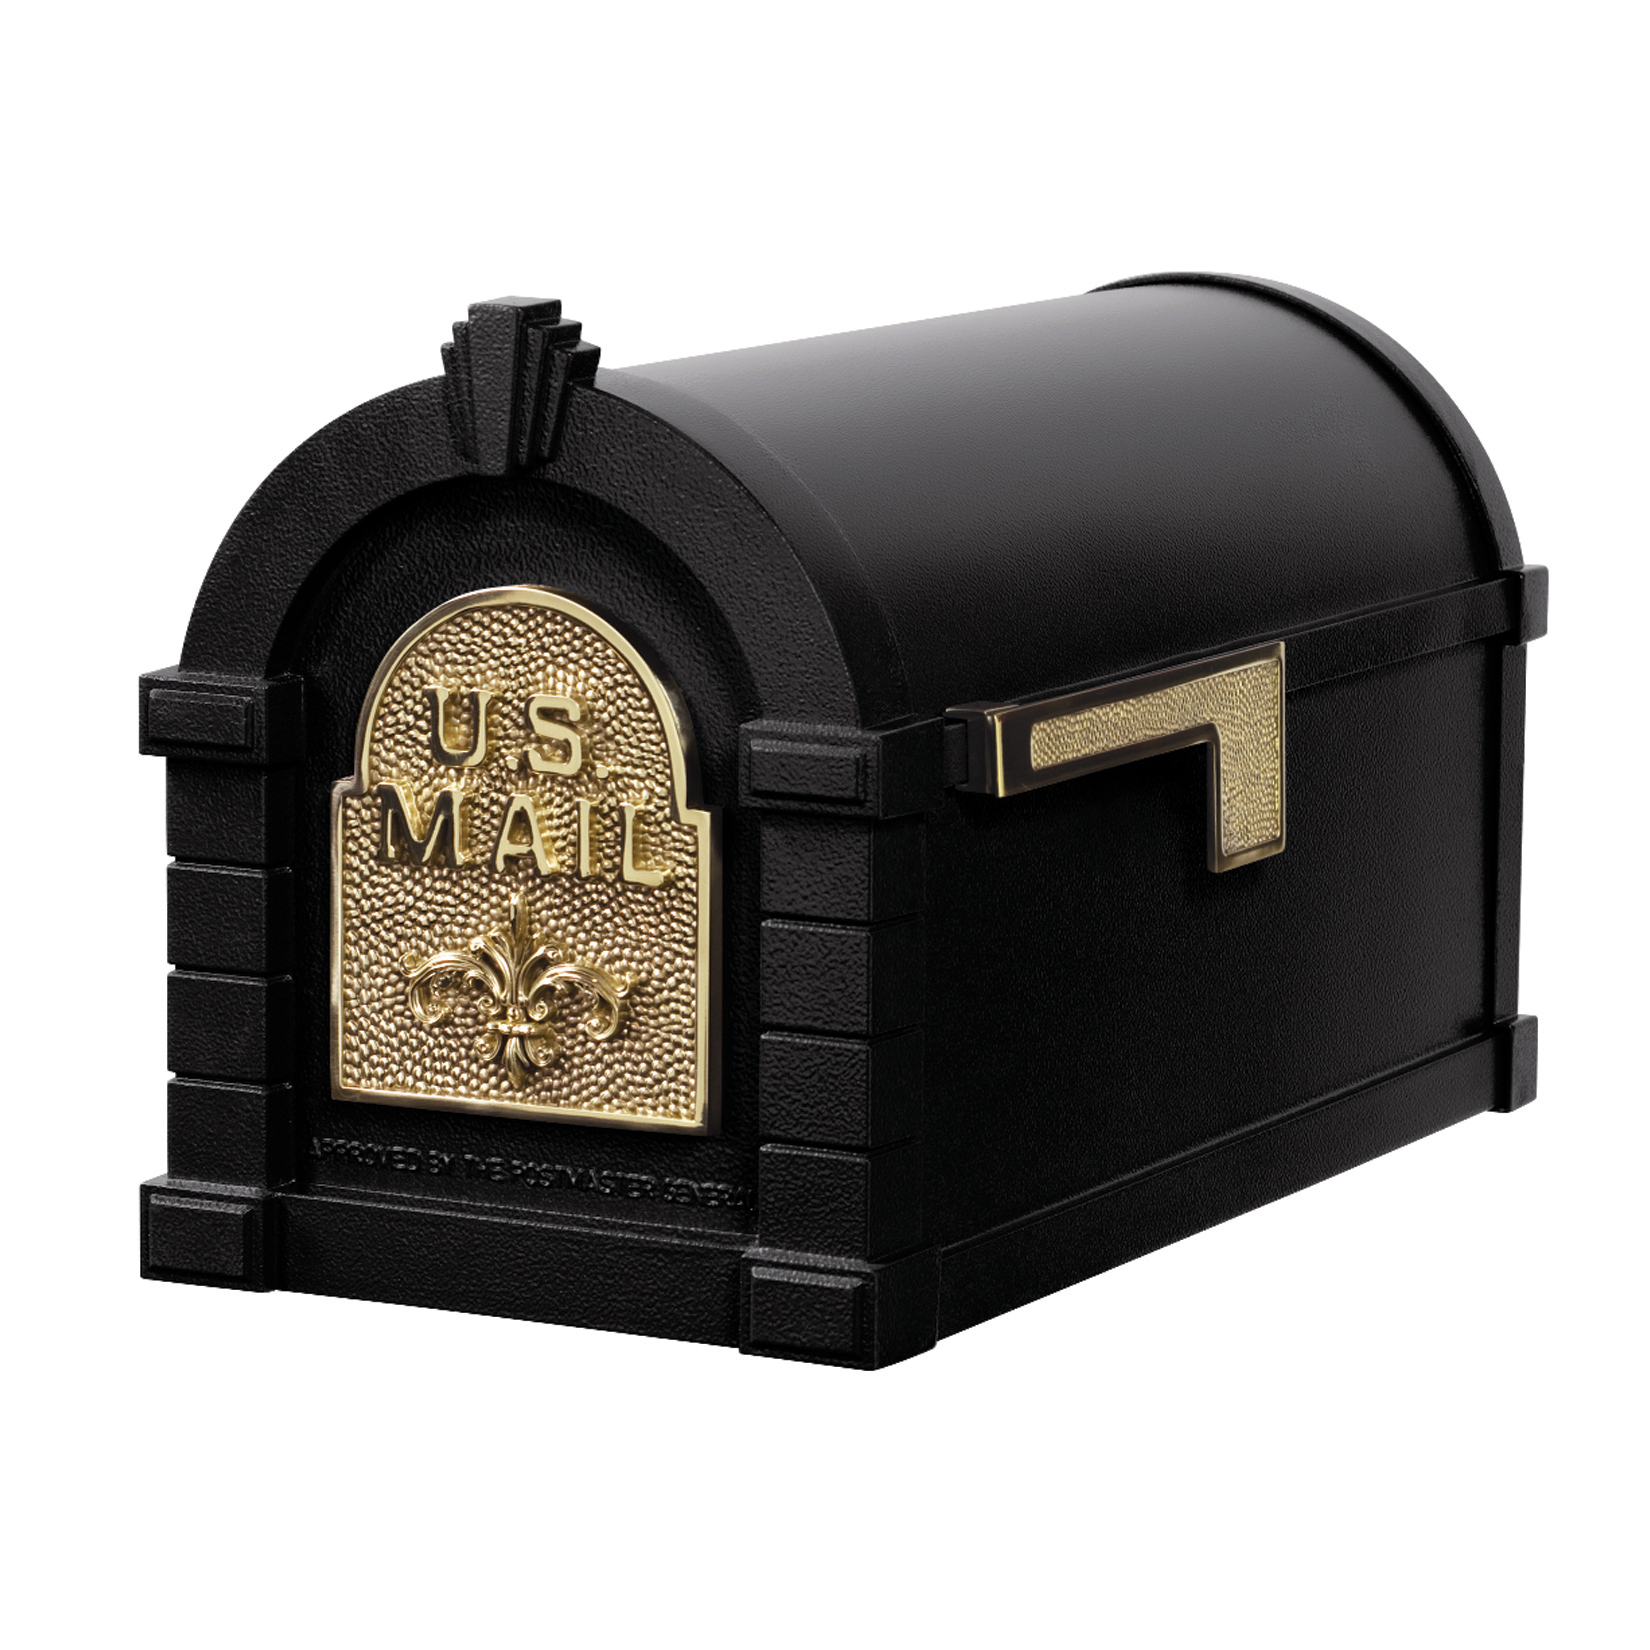 Gaines Fleur De Lis Keystone Mailboxes<br >Black with Polished Brass